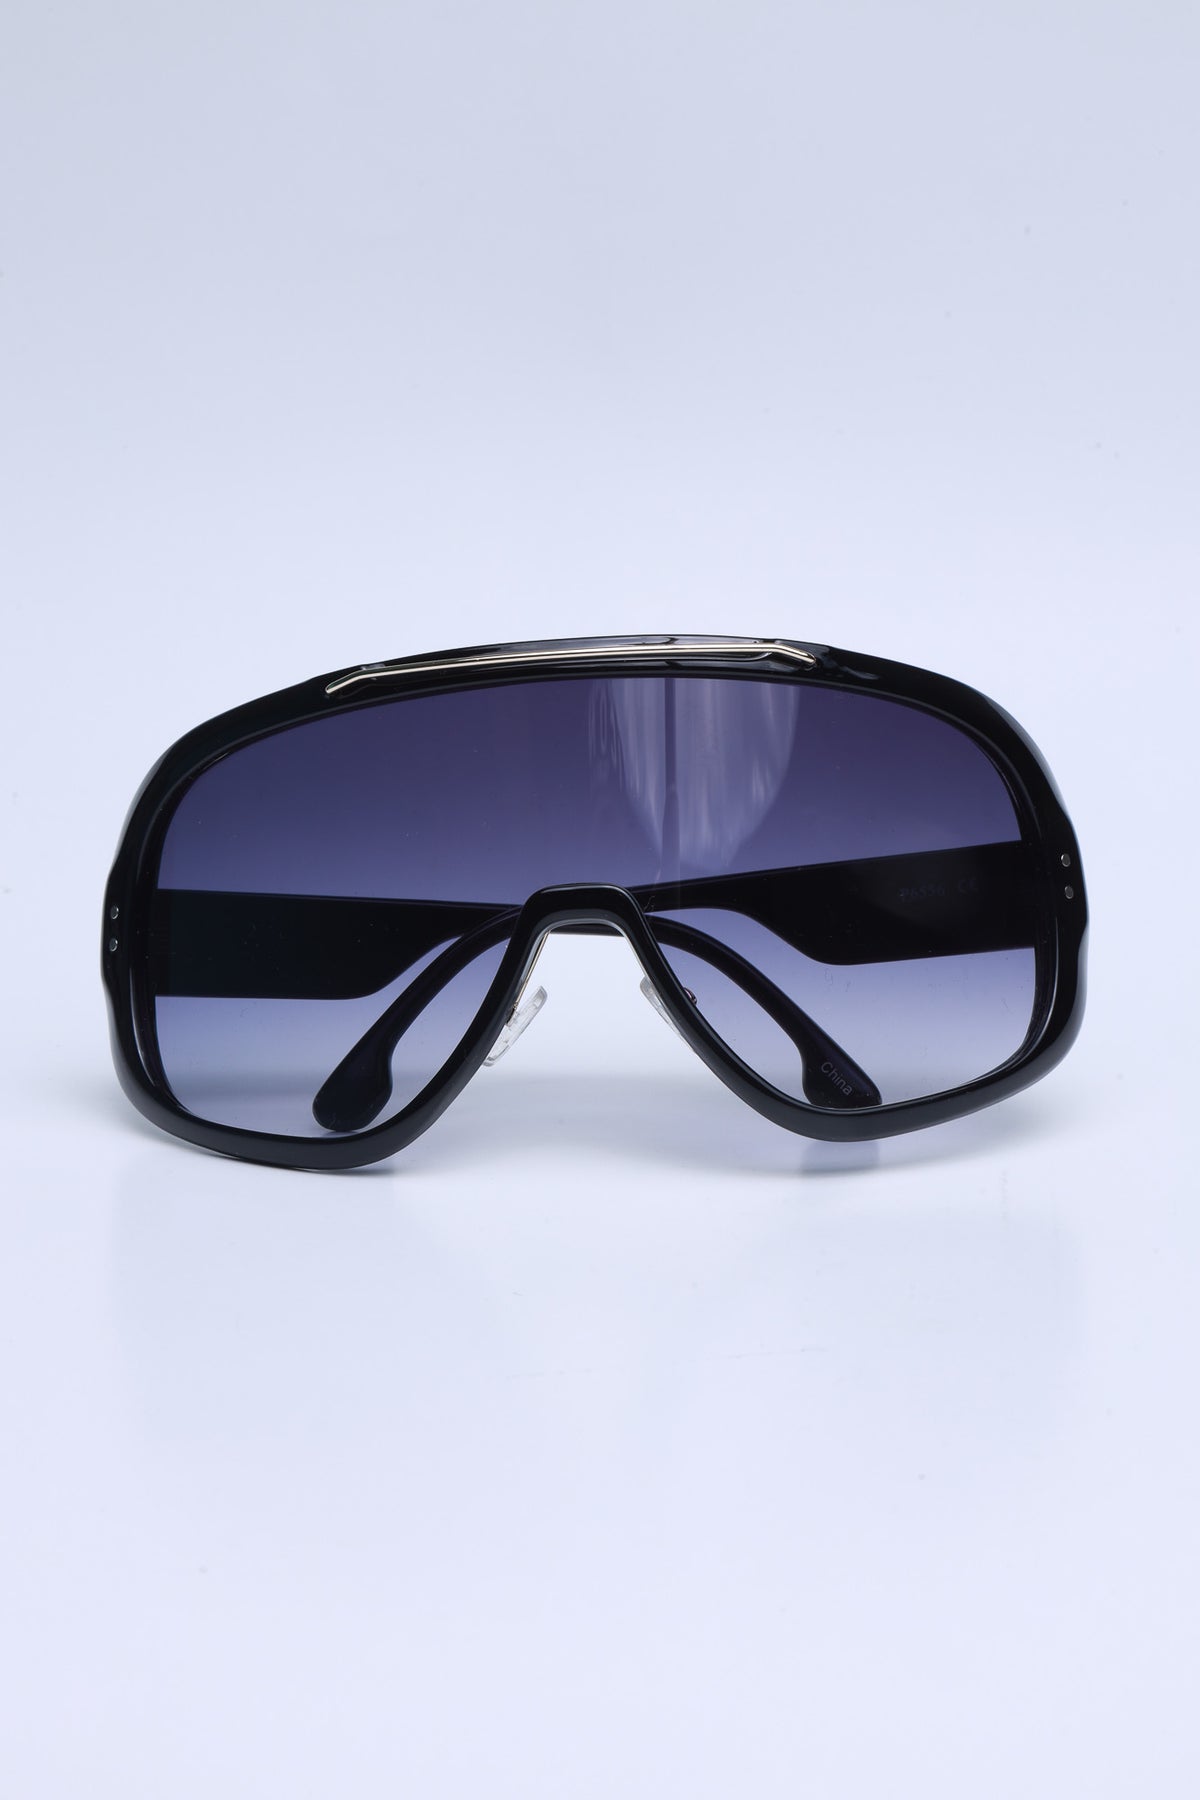 
              Undercover Curved Shield Sunglasses - Black/Black - Swank A Posh
            